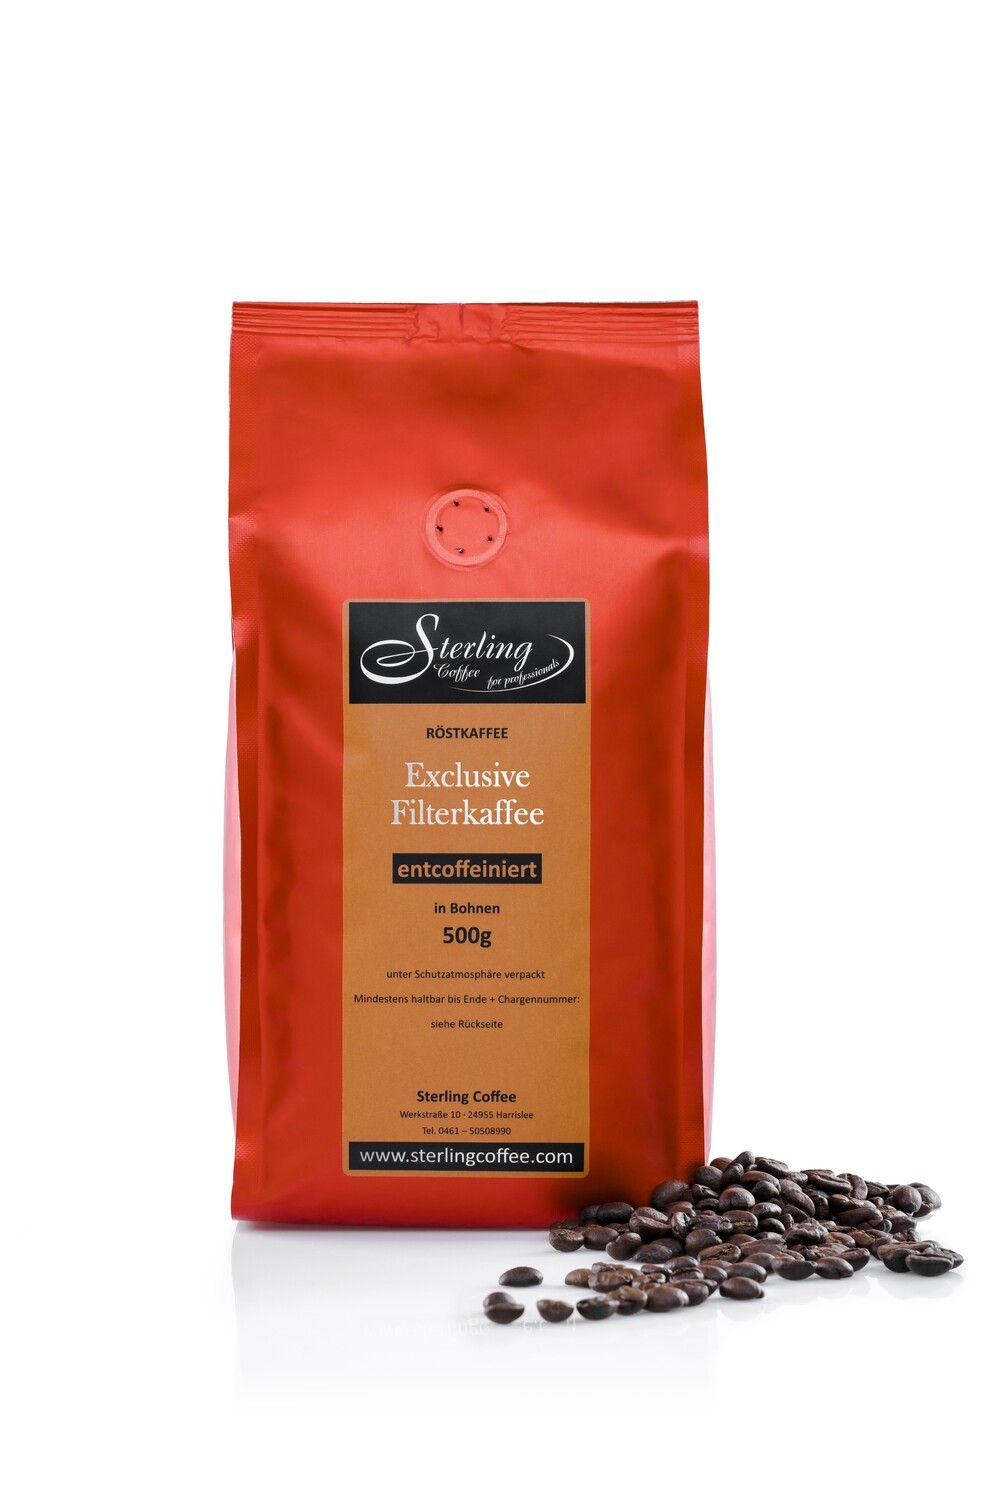 Sterling Coffee Exclusive Filterkaffee, entcoffeiniert
ganze Bohne, 500g ⭐️⭐️⭐️⭐️⭐️